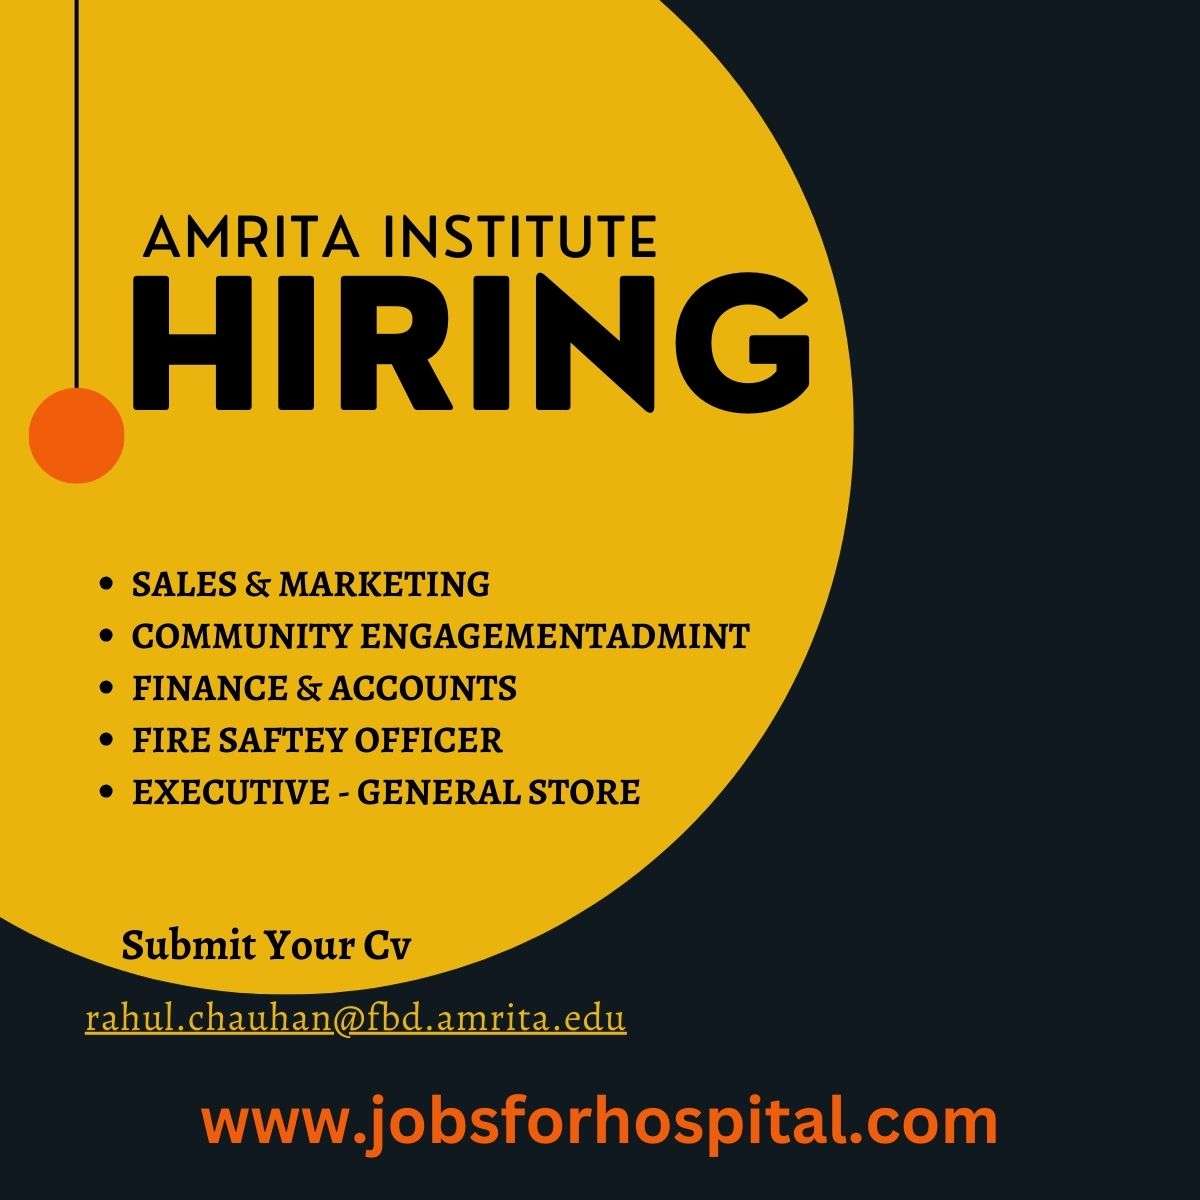 Amrita institute. jobsforhospital.com